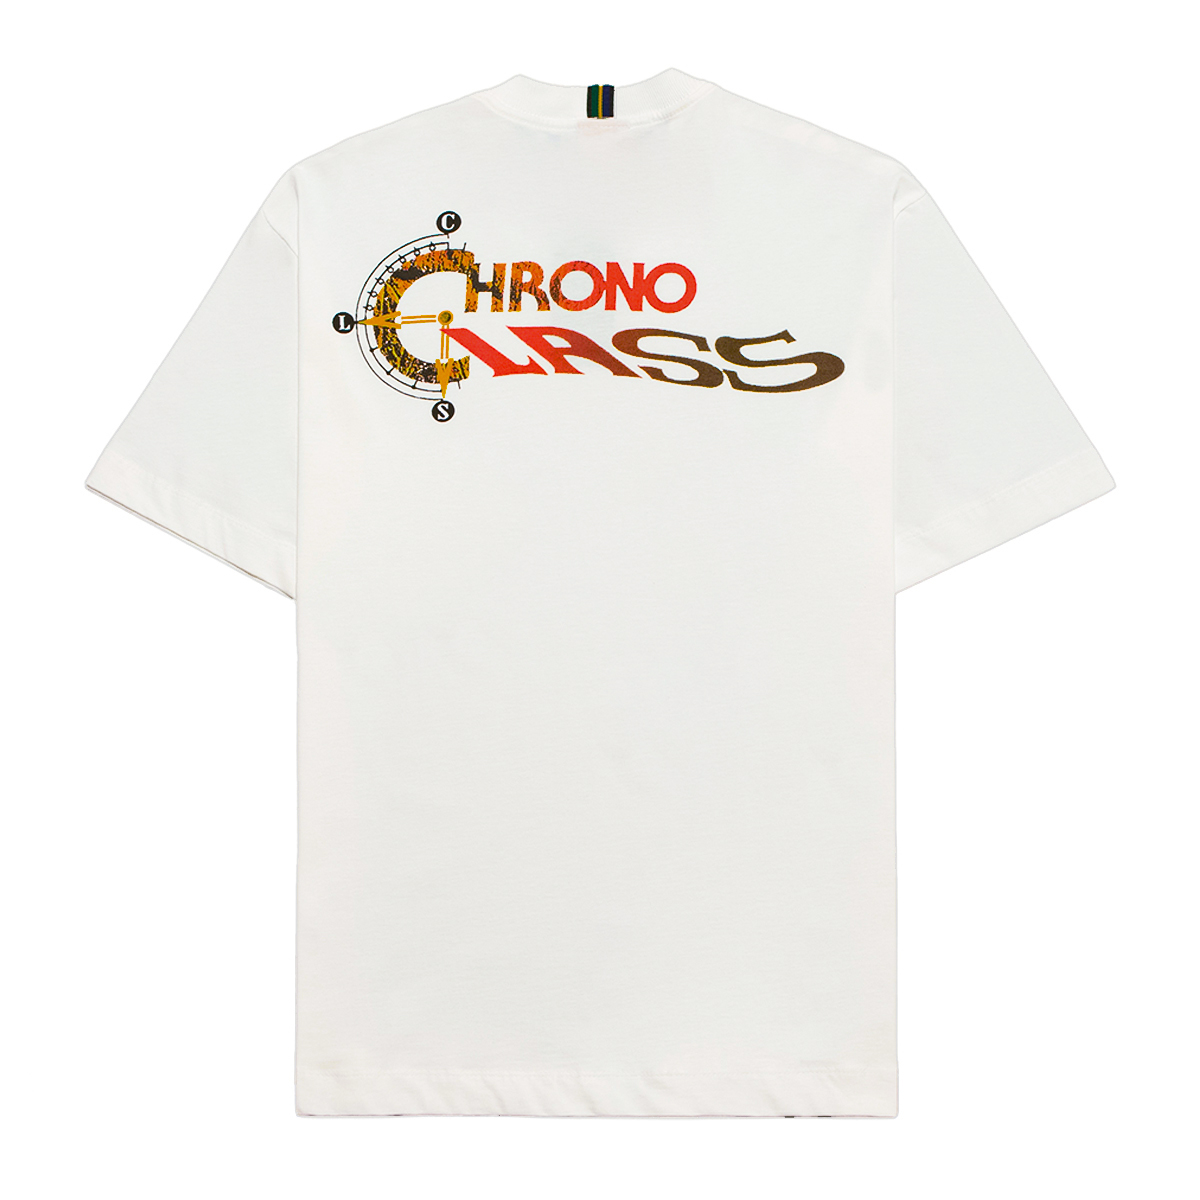 Camiseta Class Chrono Class (Off White)